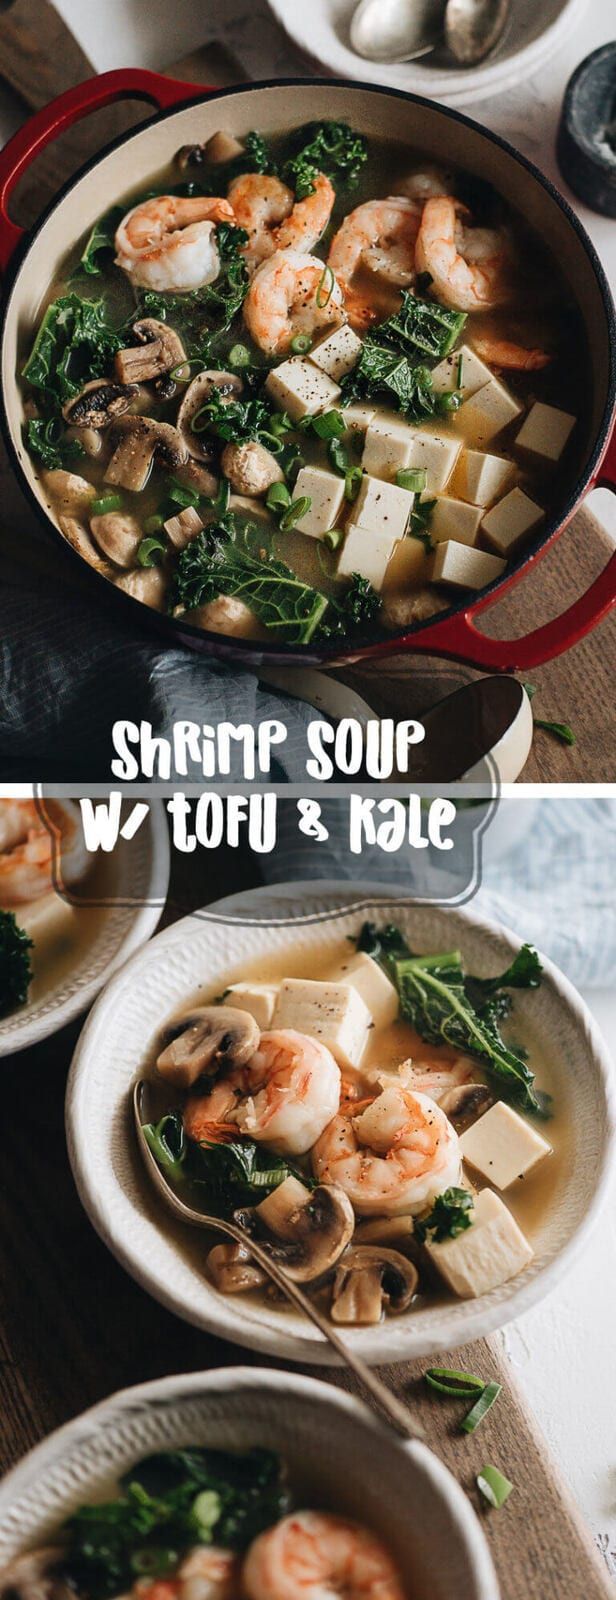 18 healthy recipes Shrimp tofu ideas